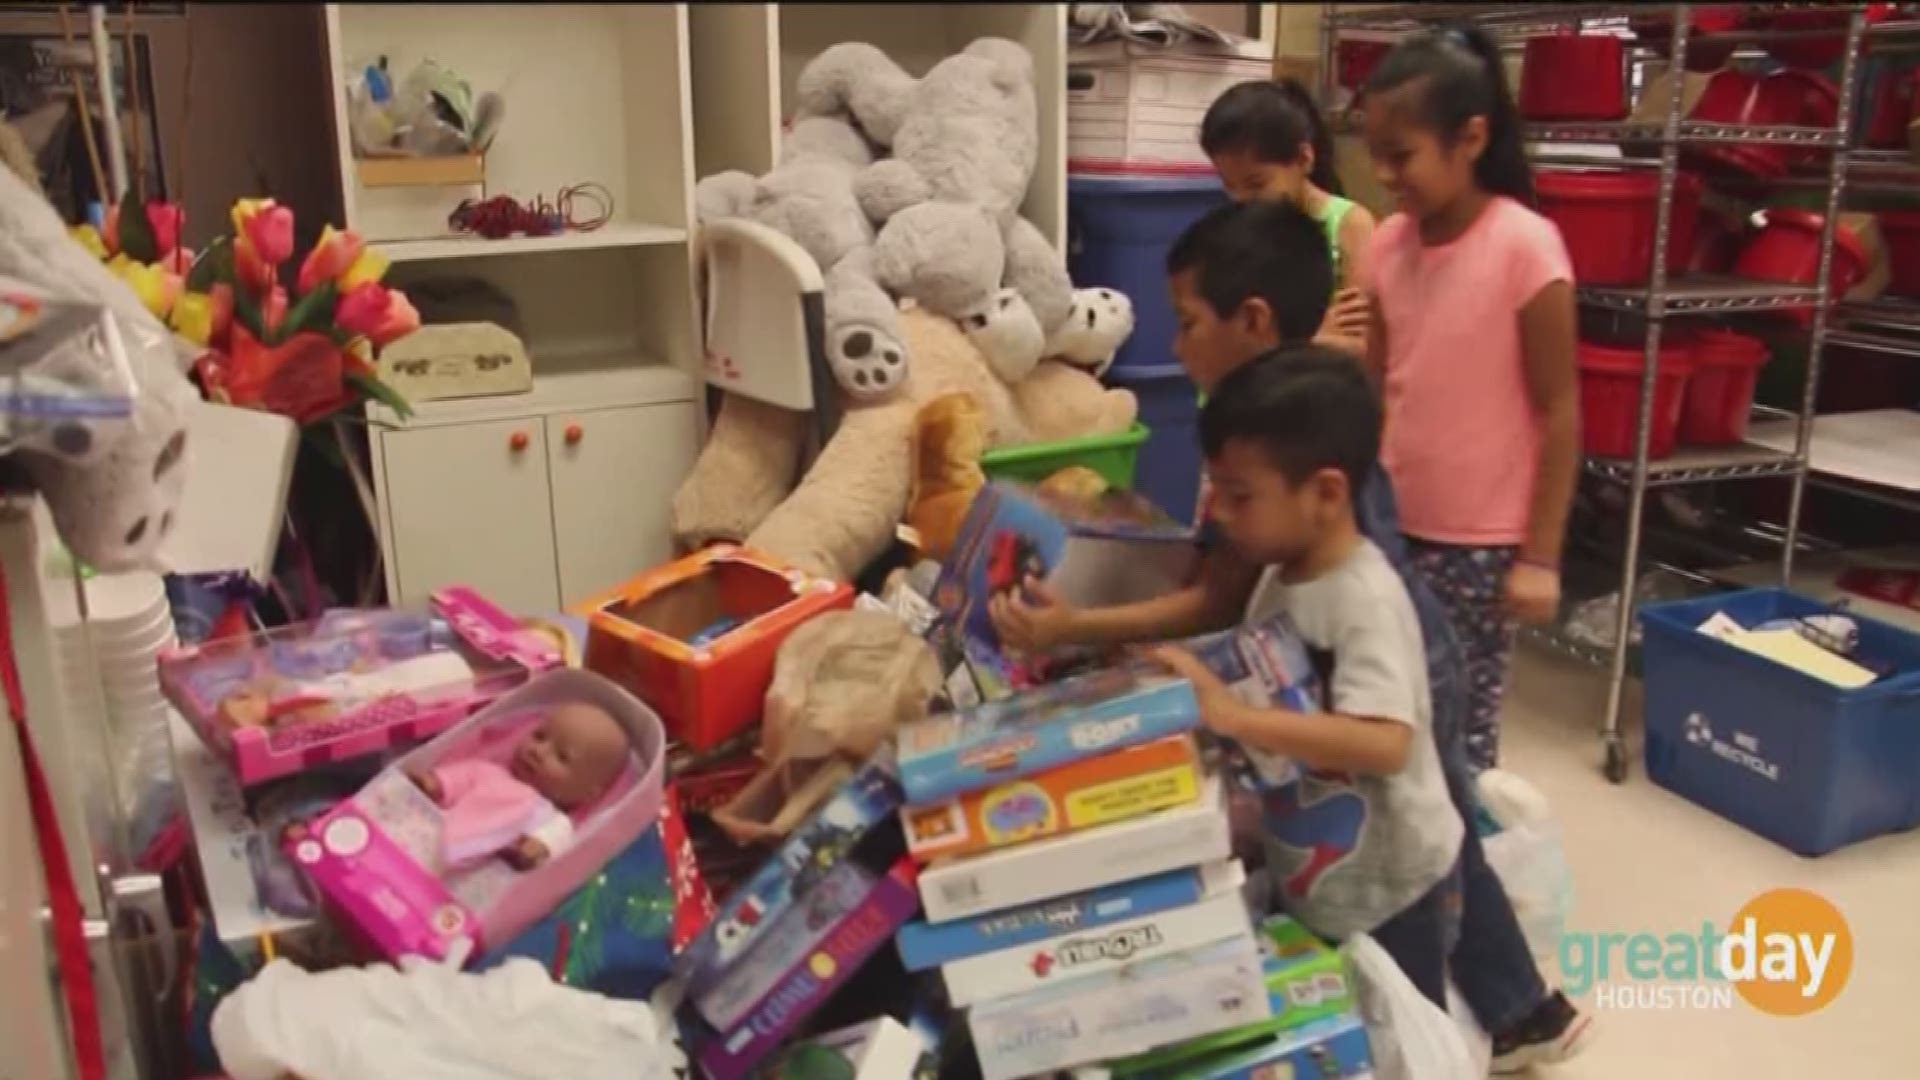 Captain Jenifer Phillips and Lt. Luis Villanueva explain the importance of donating toys to help neighbors celebrate the holidays.